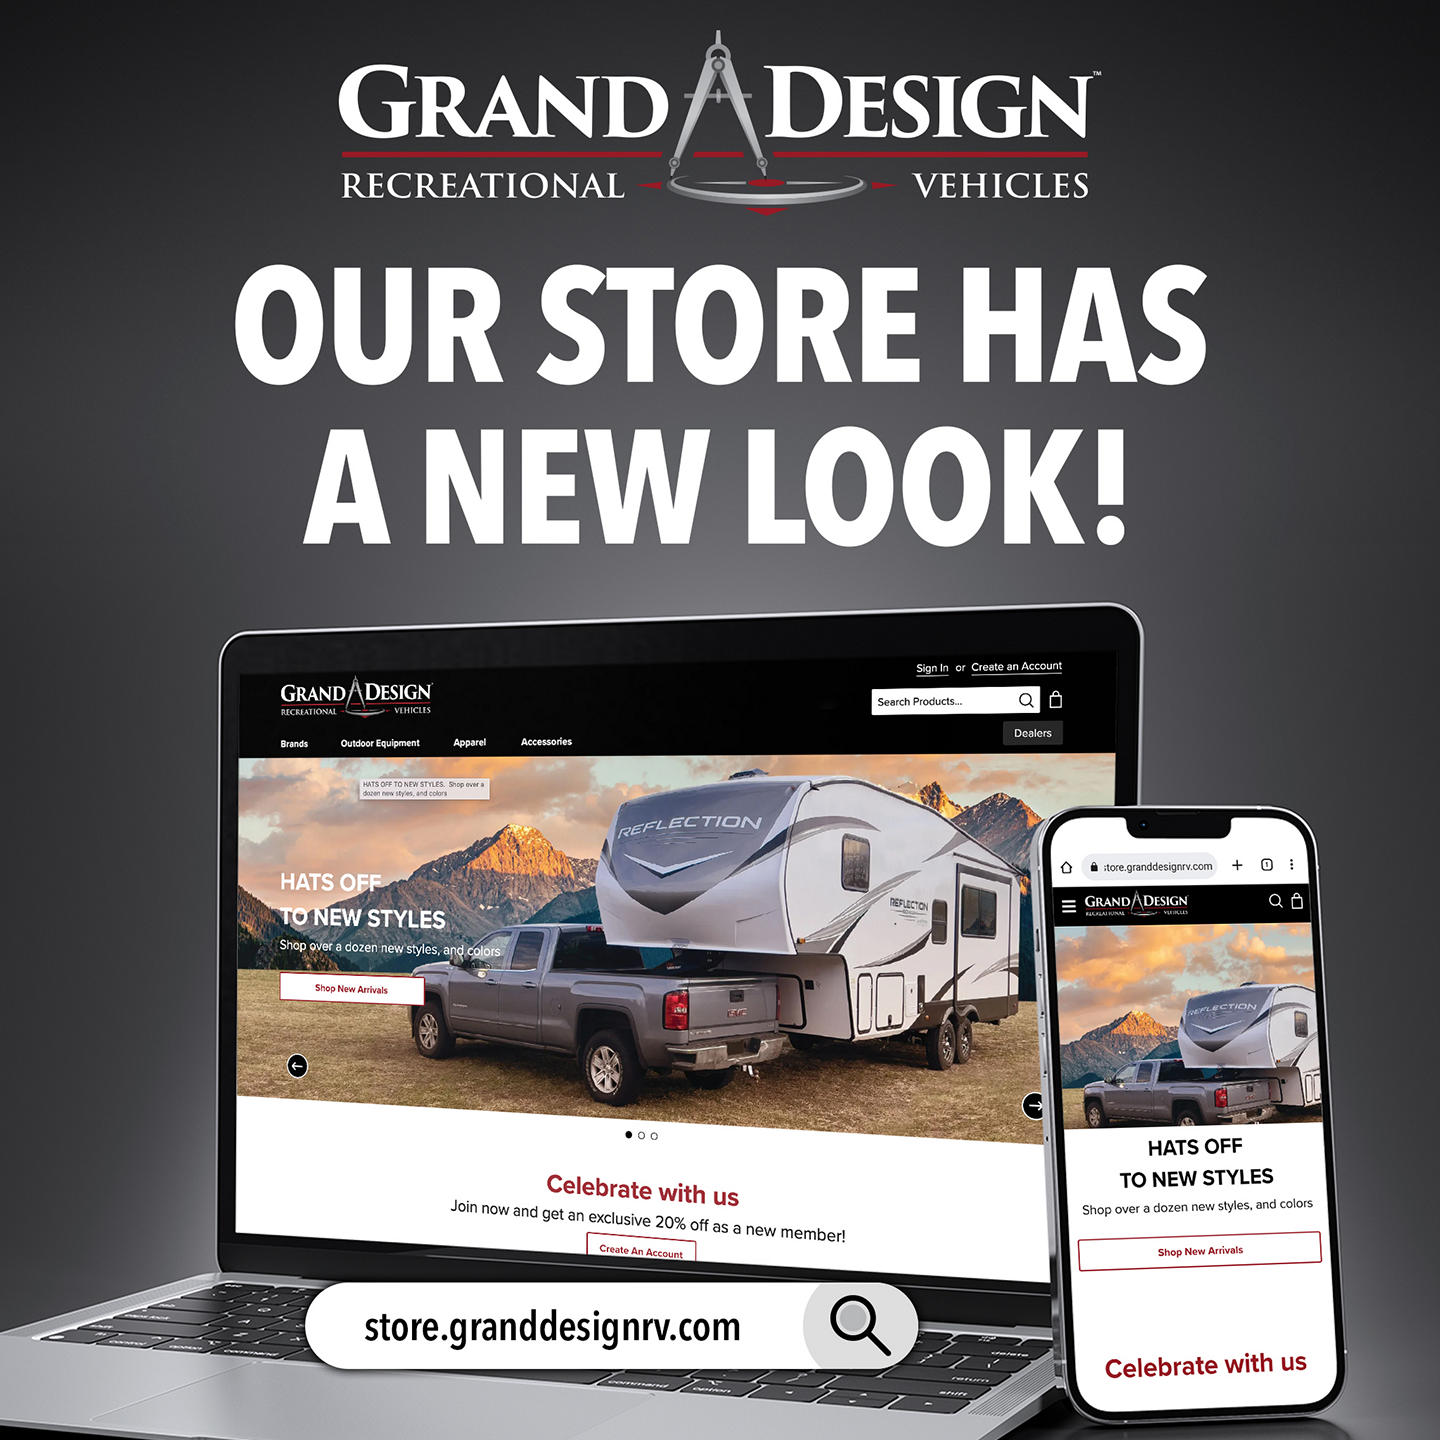 Grand Design launches new consumer merchandise platform